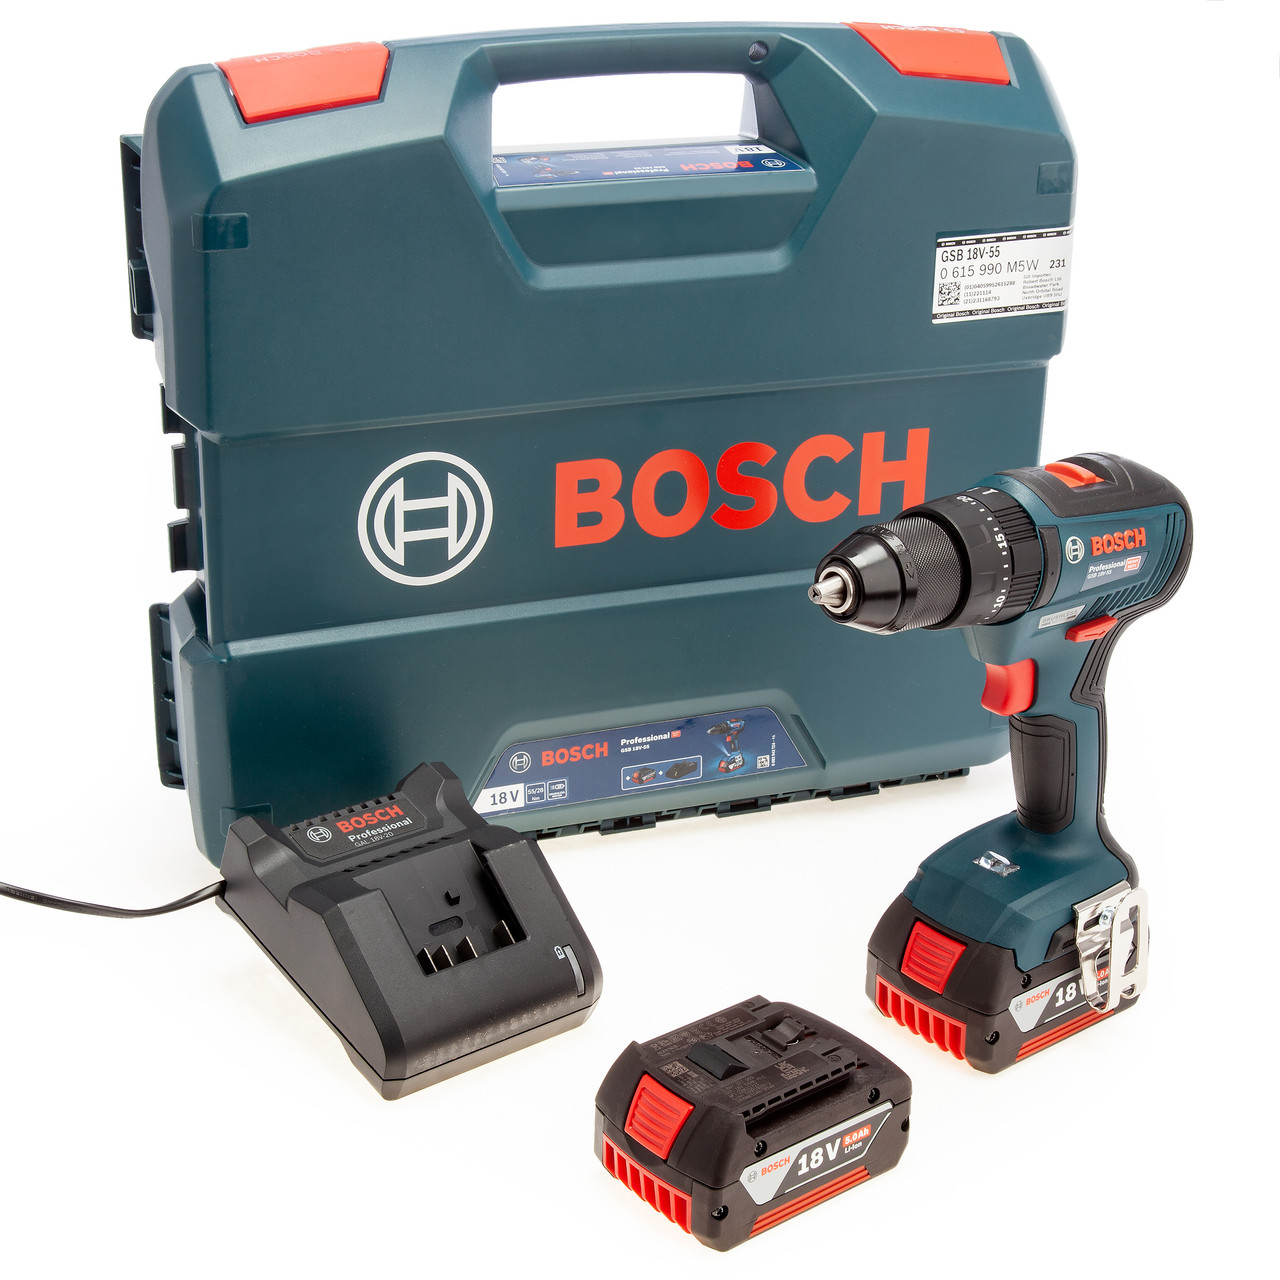 Bosch GSB 18V-55 Combi Drill (2 x 5Ah Batteries)